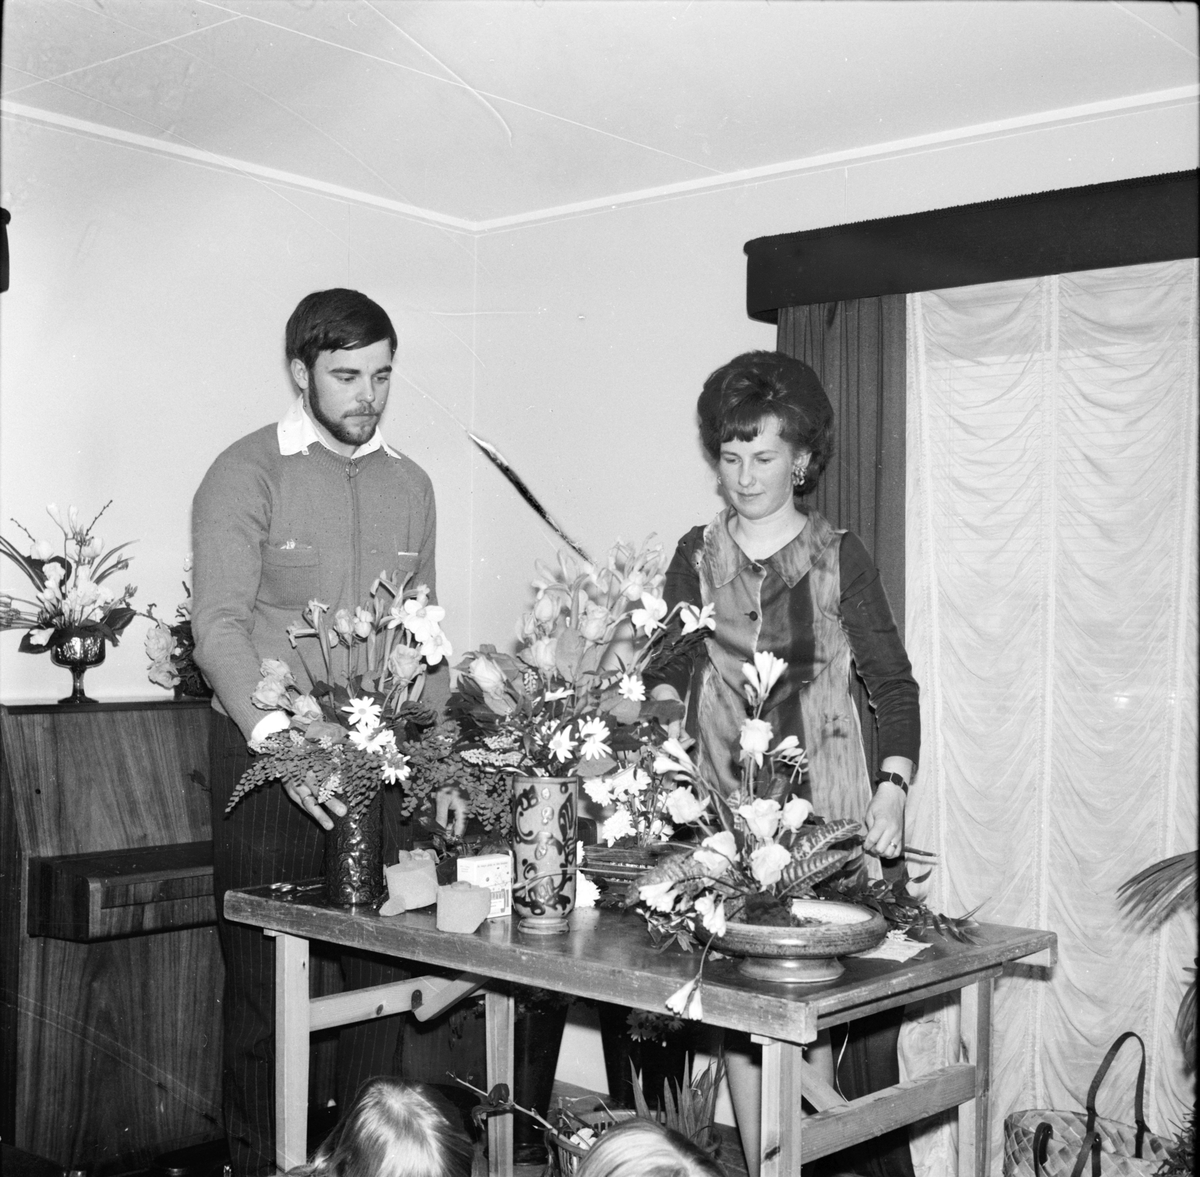 Arbrå,
Mannekänguppvisning,
April 1969